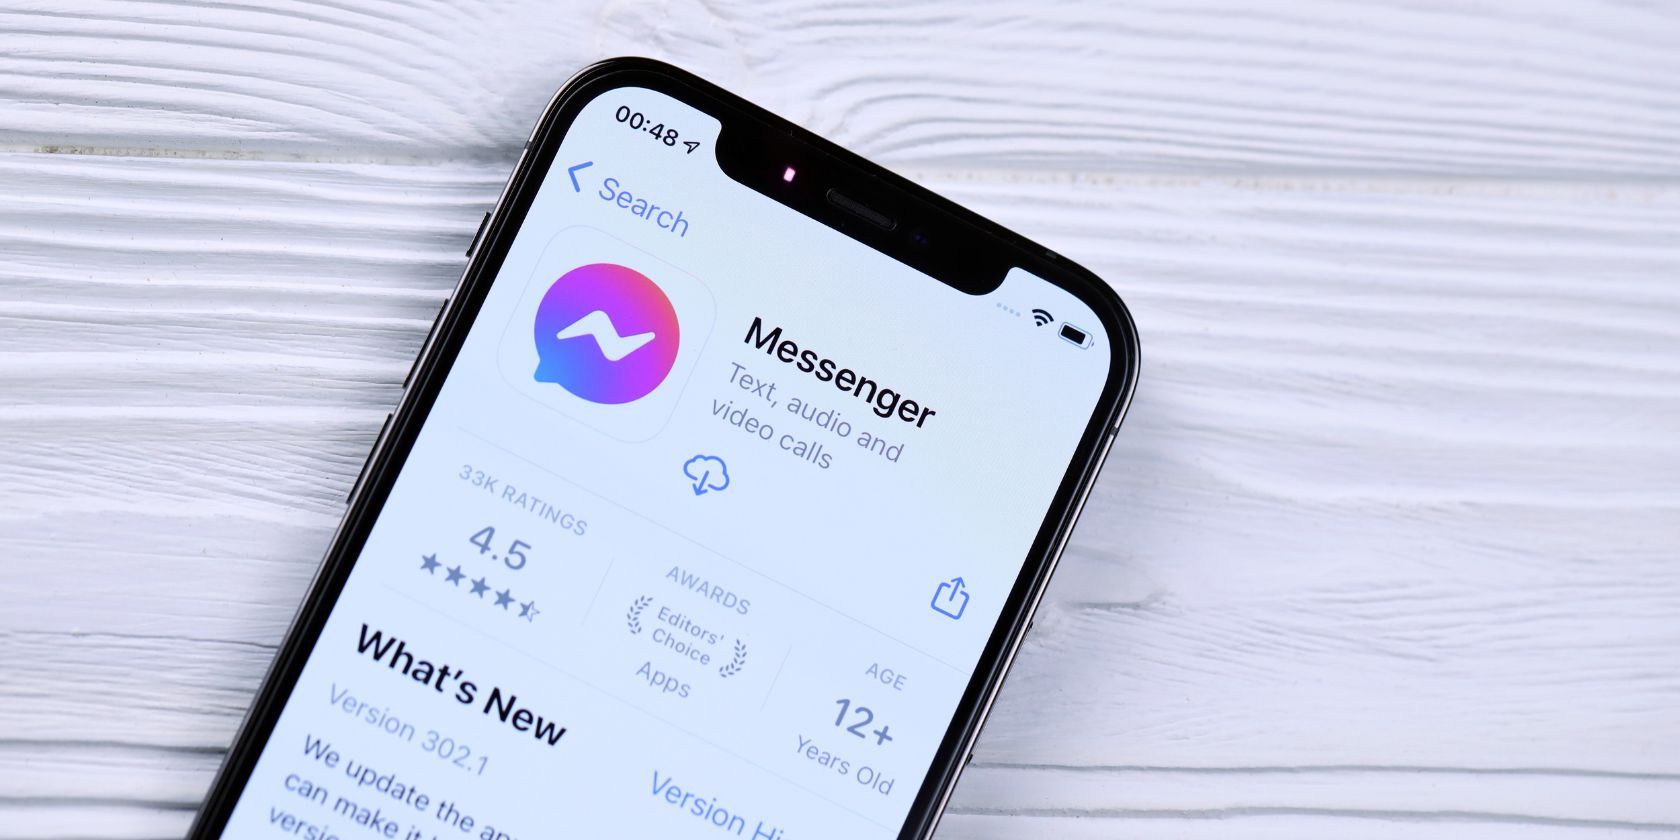 facebook messenger app store listing on a smartphone